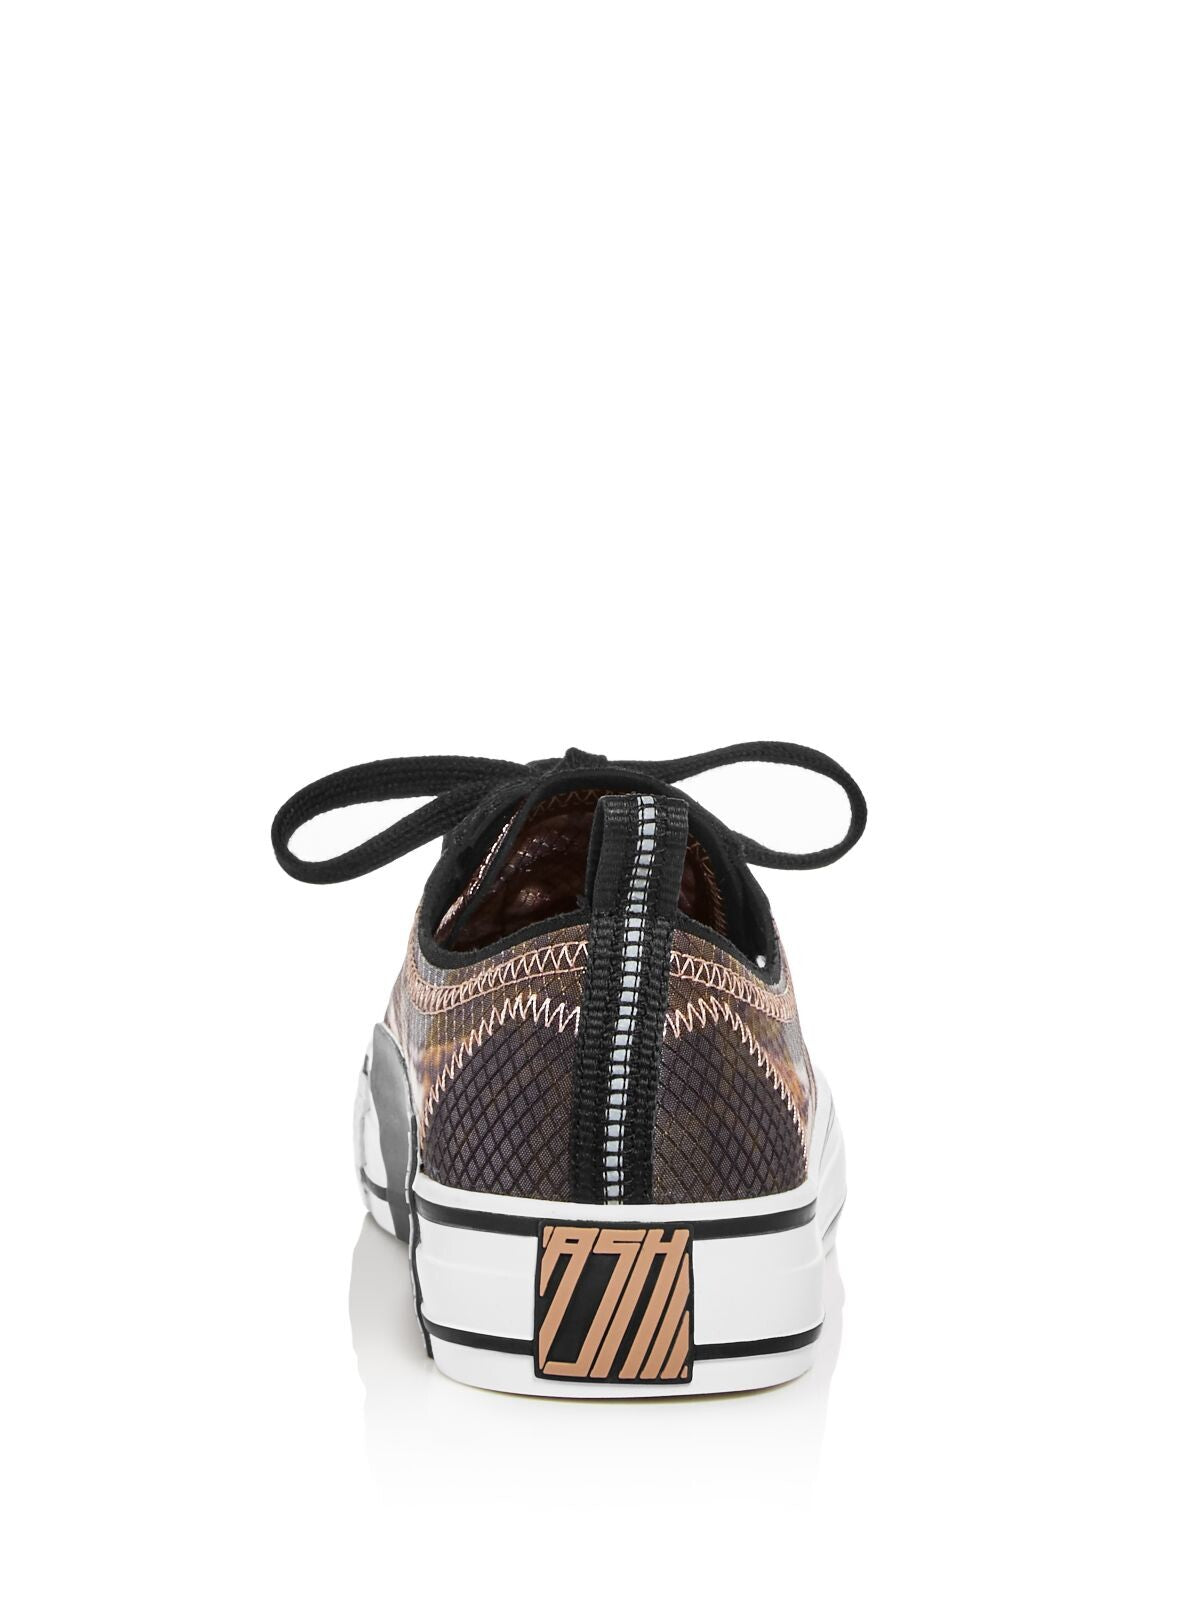 ASH Womens Black Tie Dye Pull Tab Comfort Vertu Round Toe Platform Lace-Up Athletic Sneakers Shoes 39